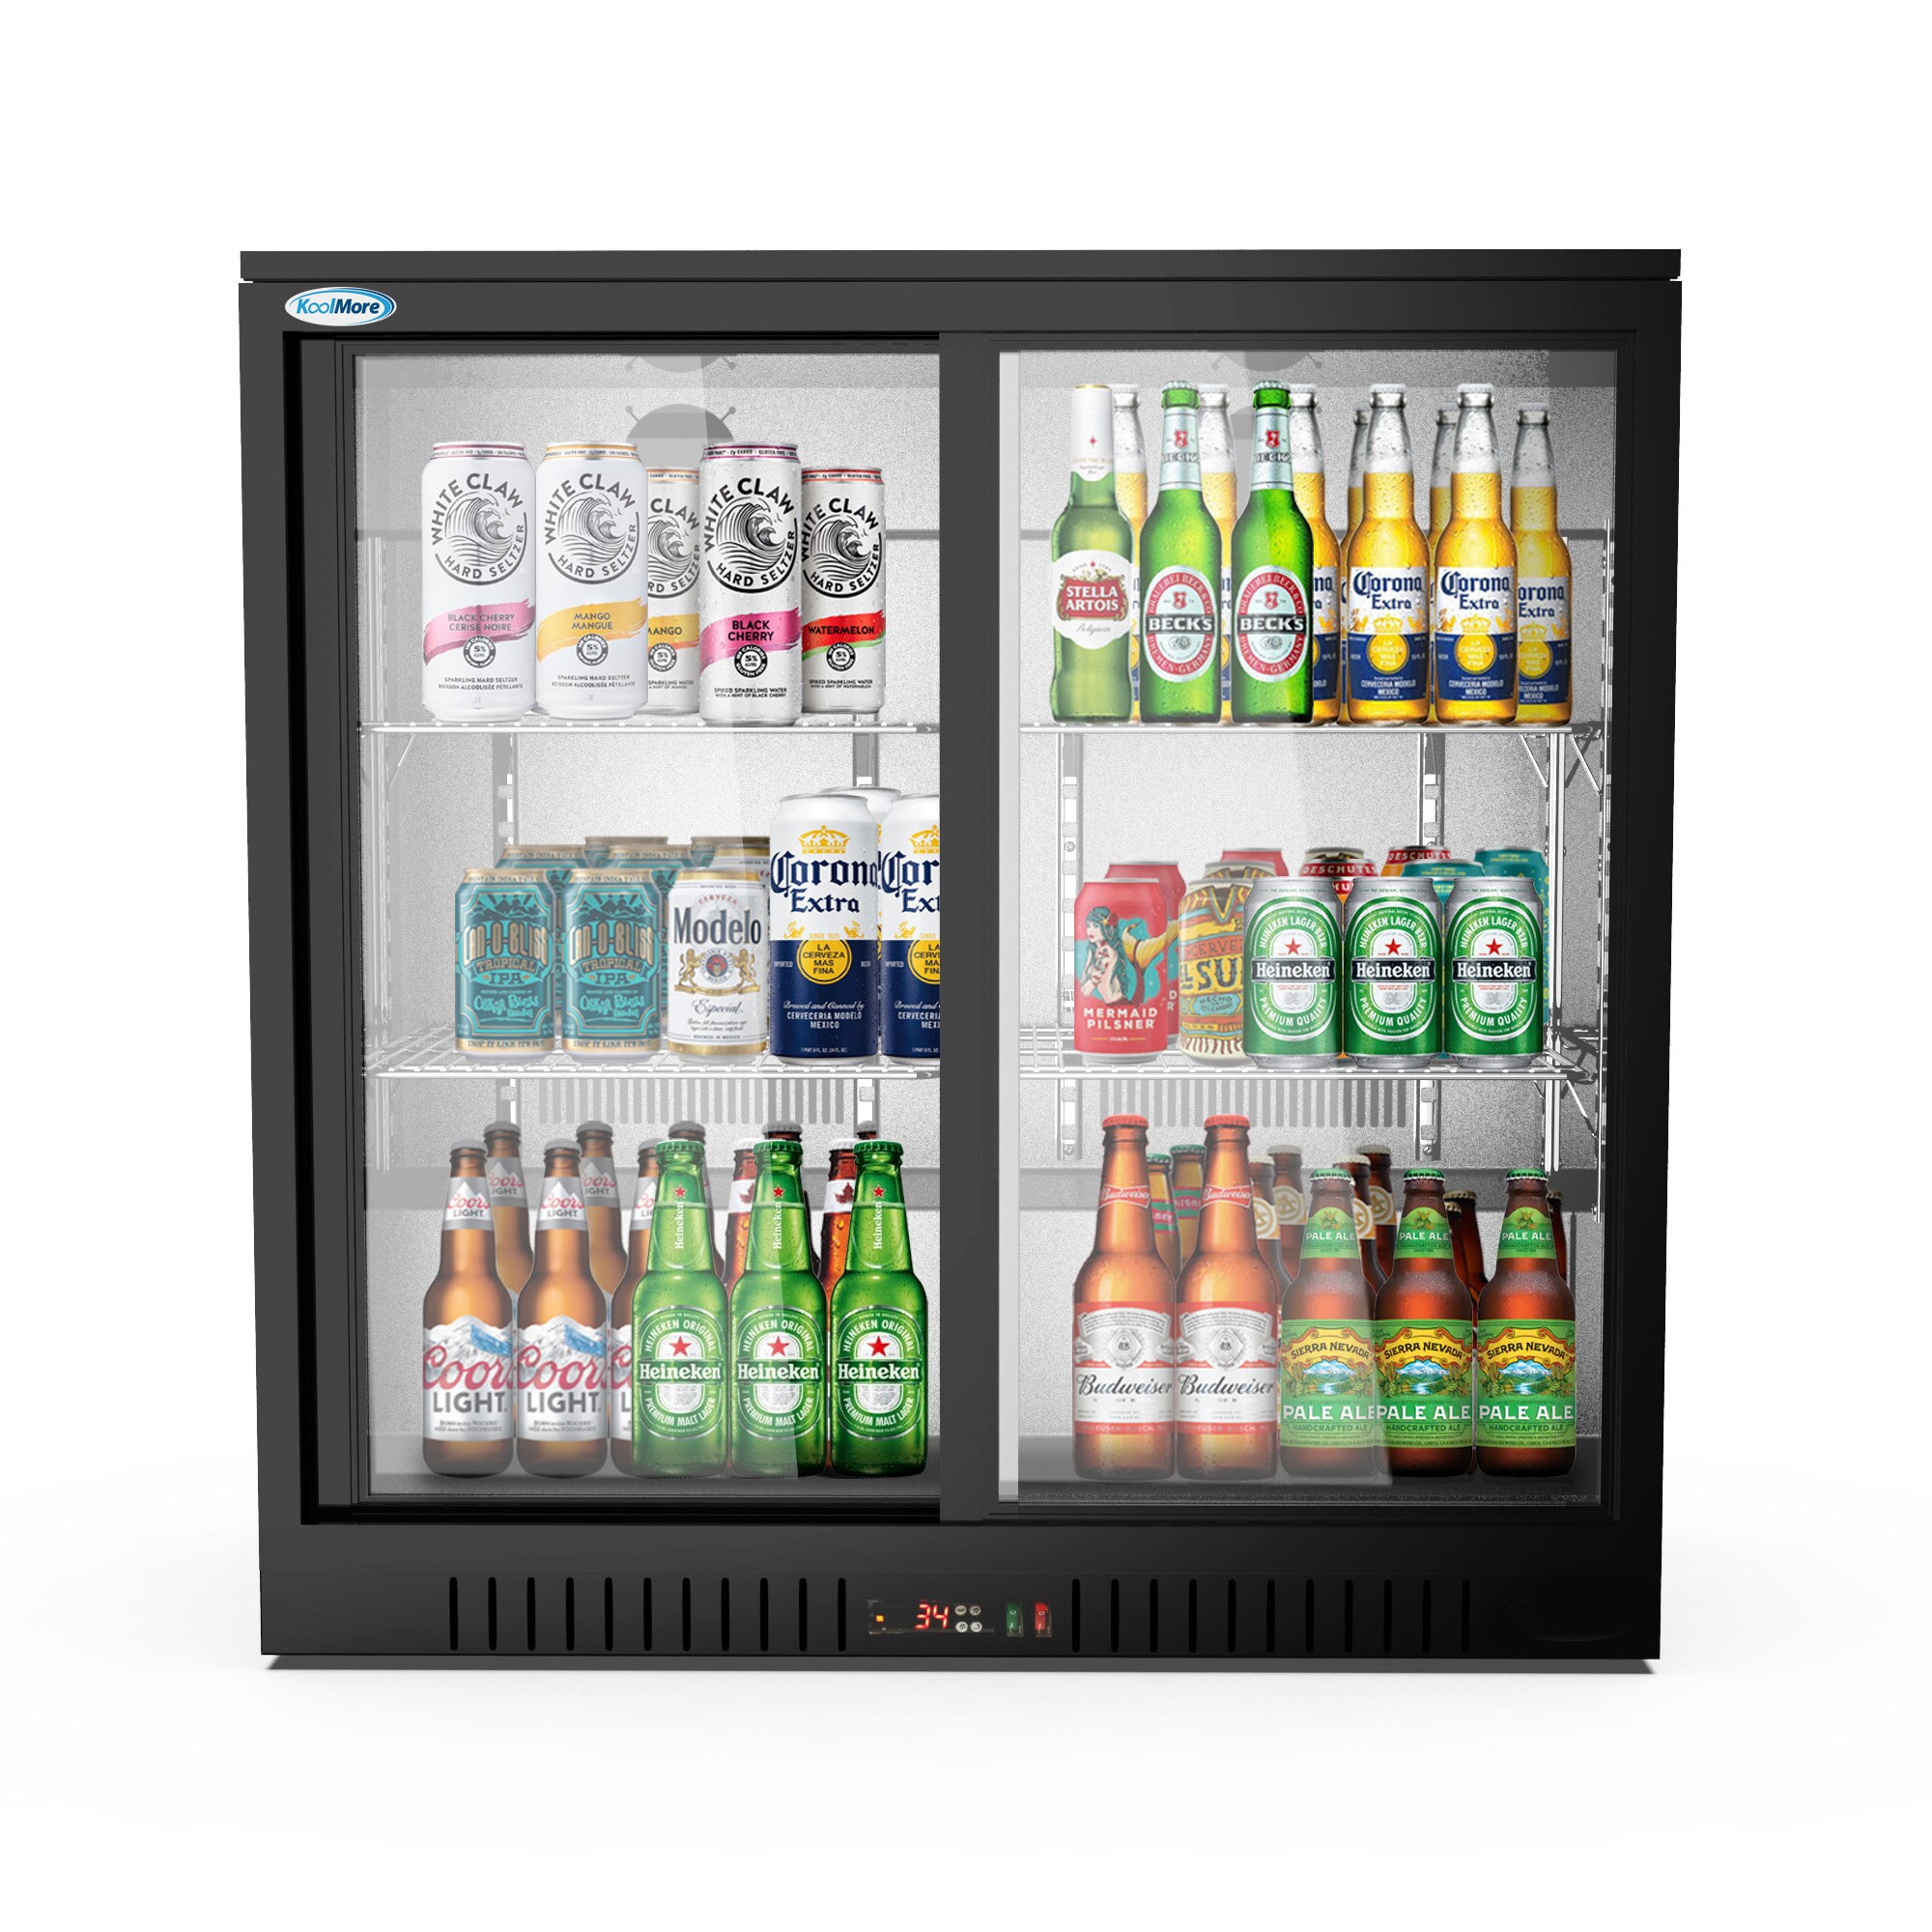 Commercial Beverage Coolers: Beer Coolers & Bar Refrigerators